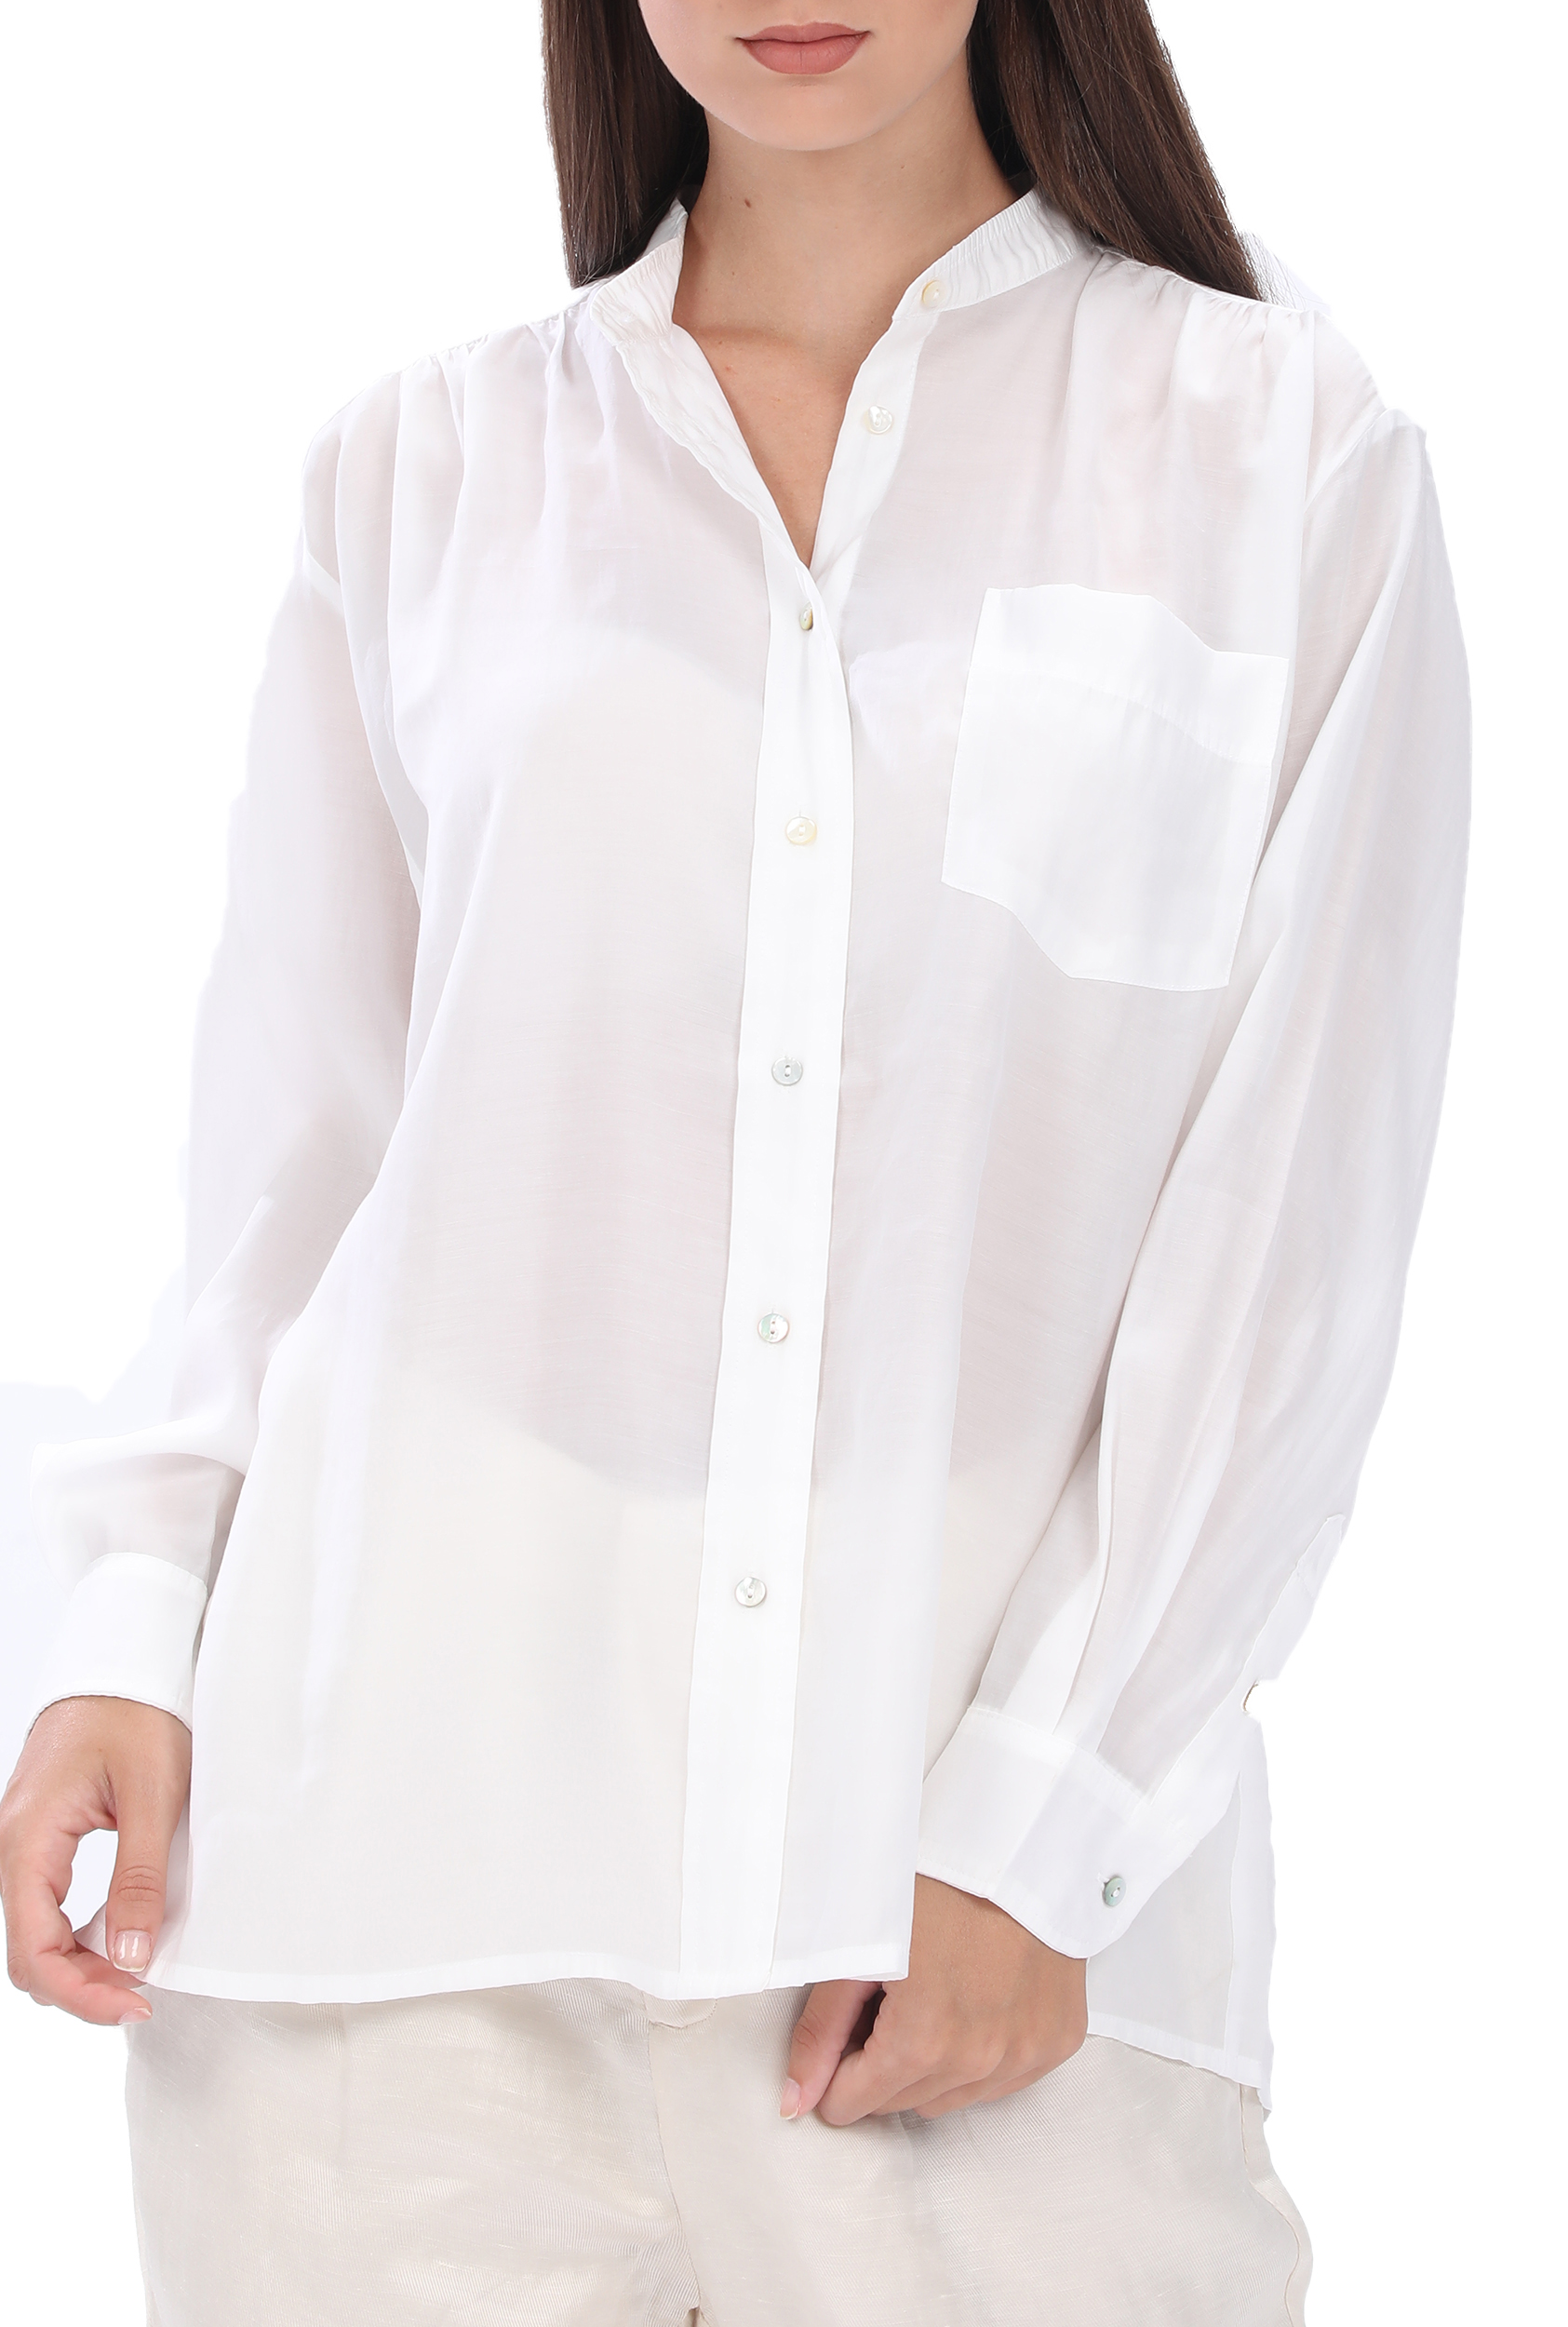 MOLLY BRACKEN – Γυναικείο πουκάμισο MOLLY BRACKEN λευκό 1809941.0-0091